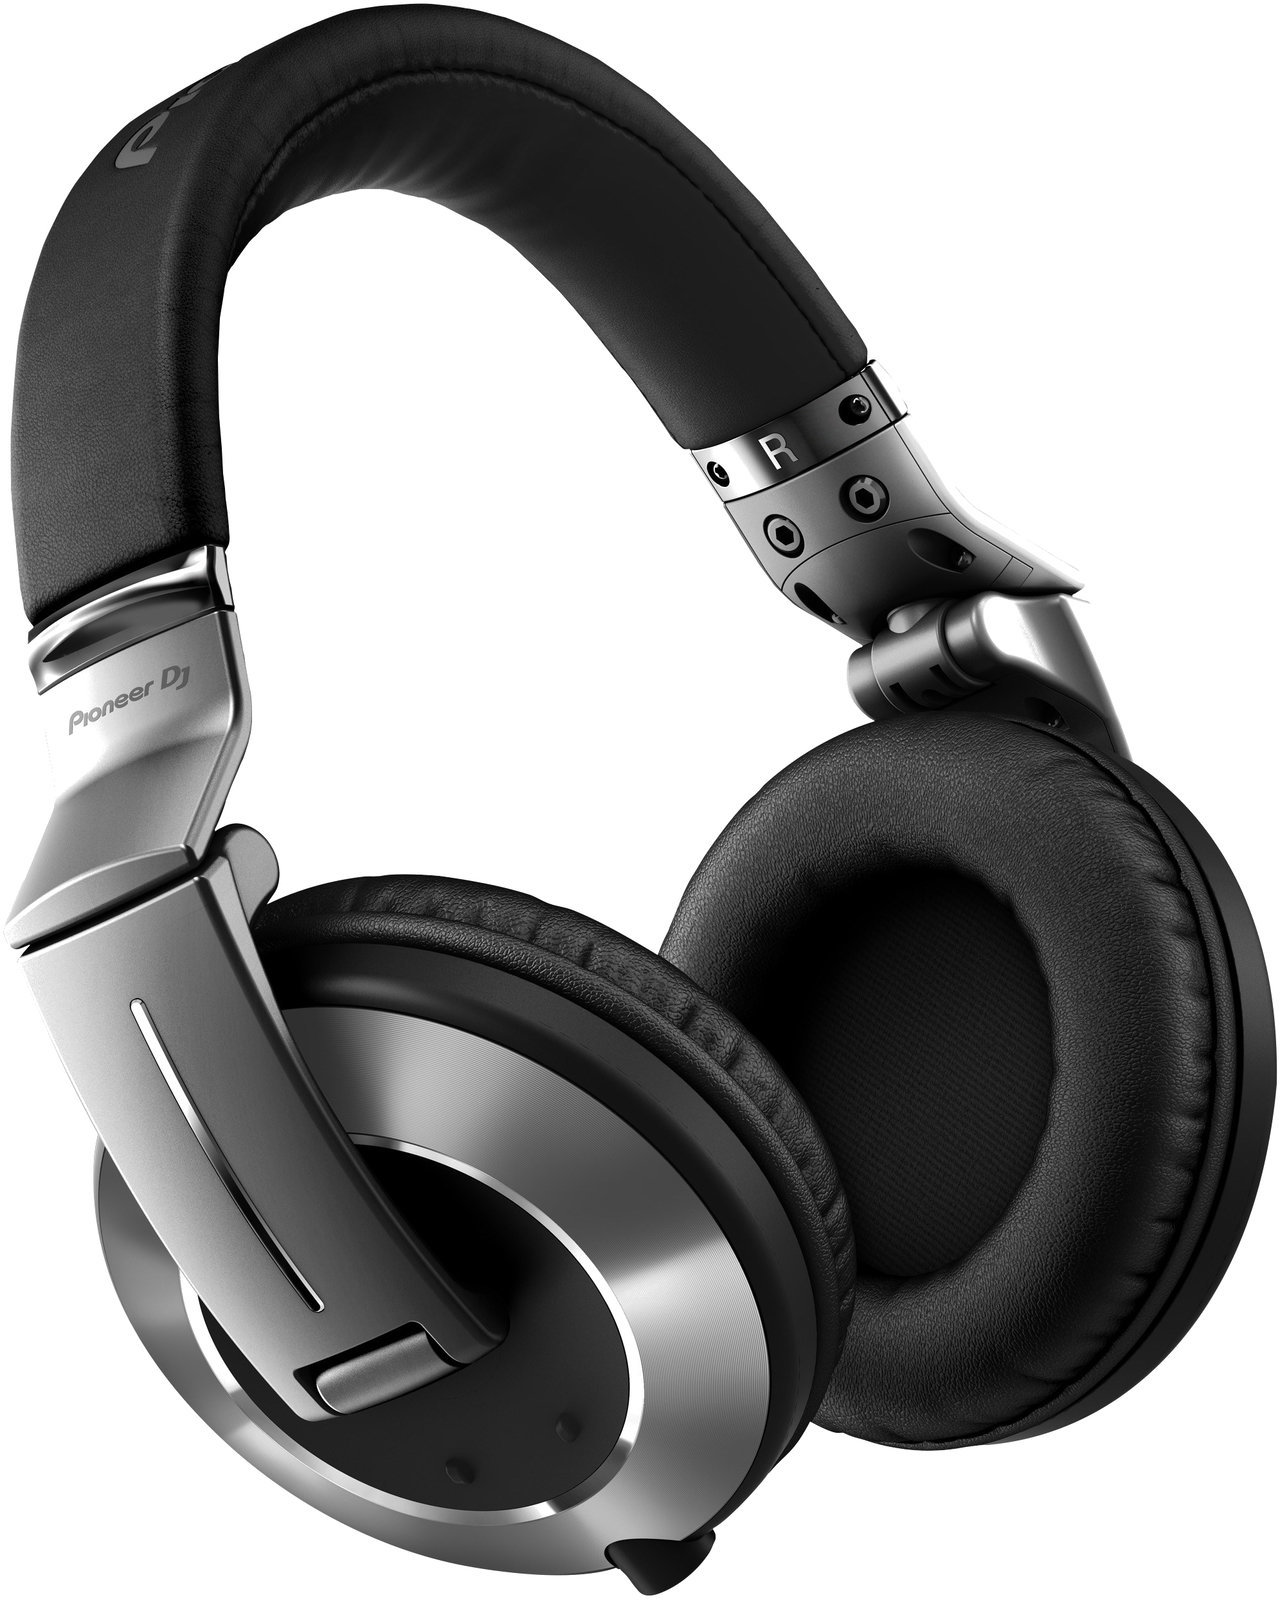 DJ Headphone Pioneer Dj HDJ-2000MK2-S